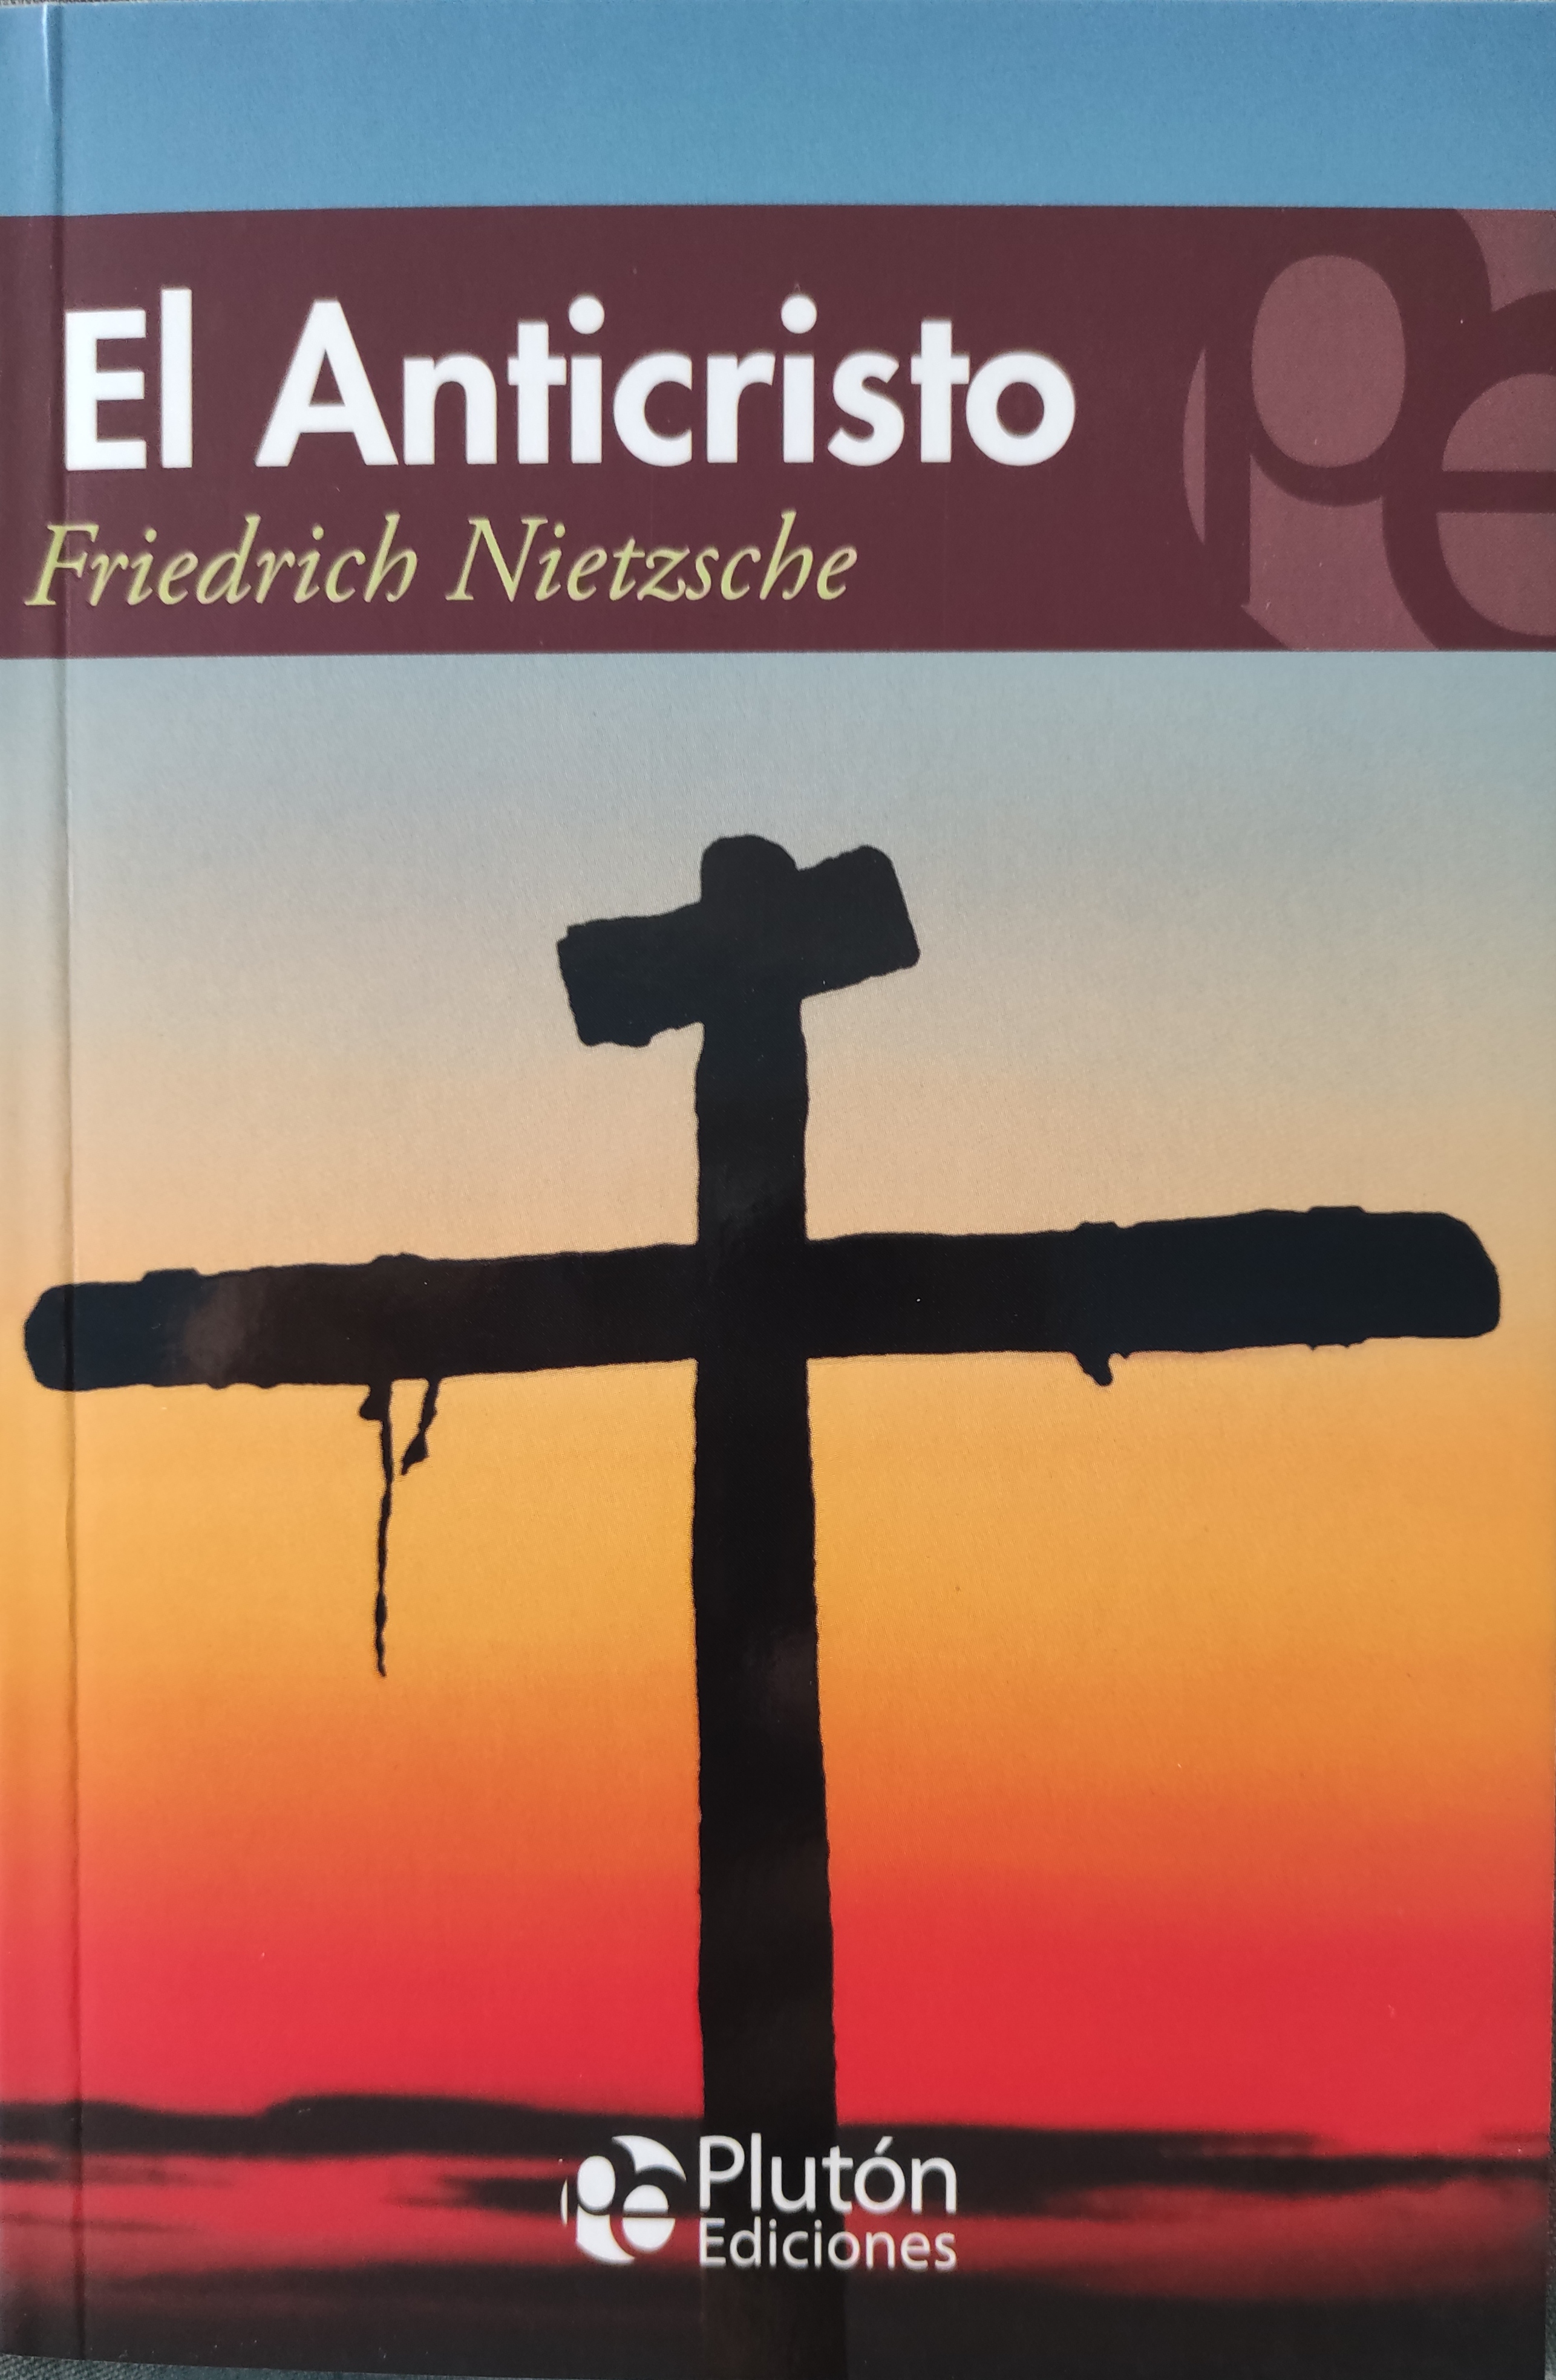 Friedrich Nietzsche: El Anticristo (Paperback, Español language, 2019, Plutón)